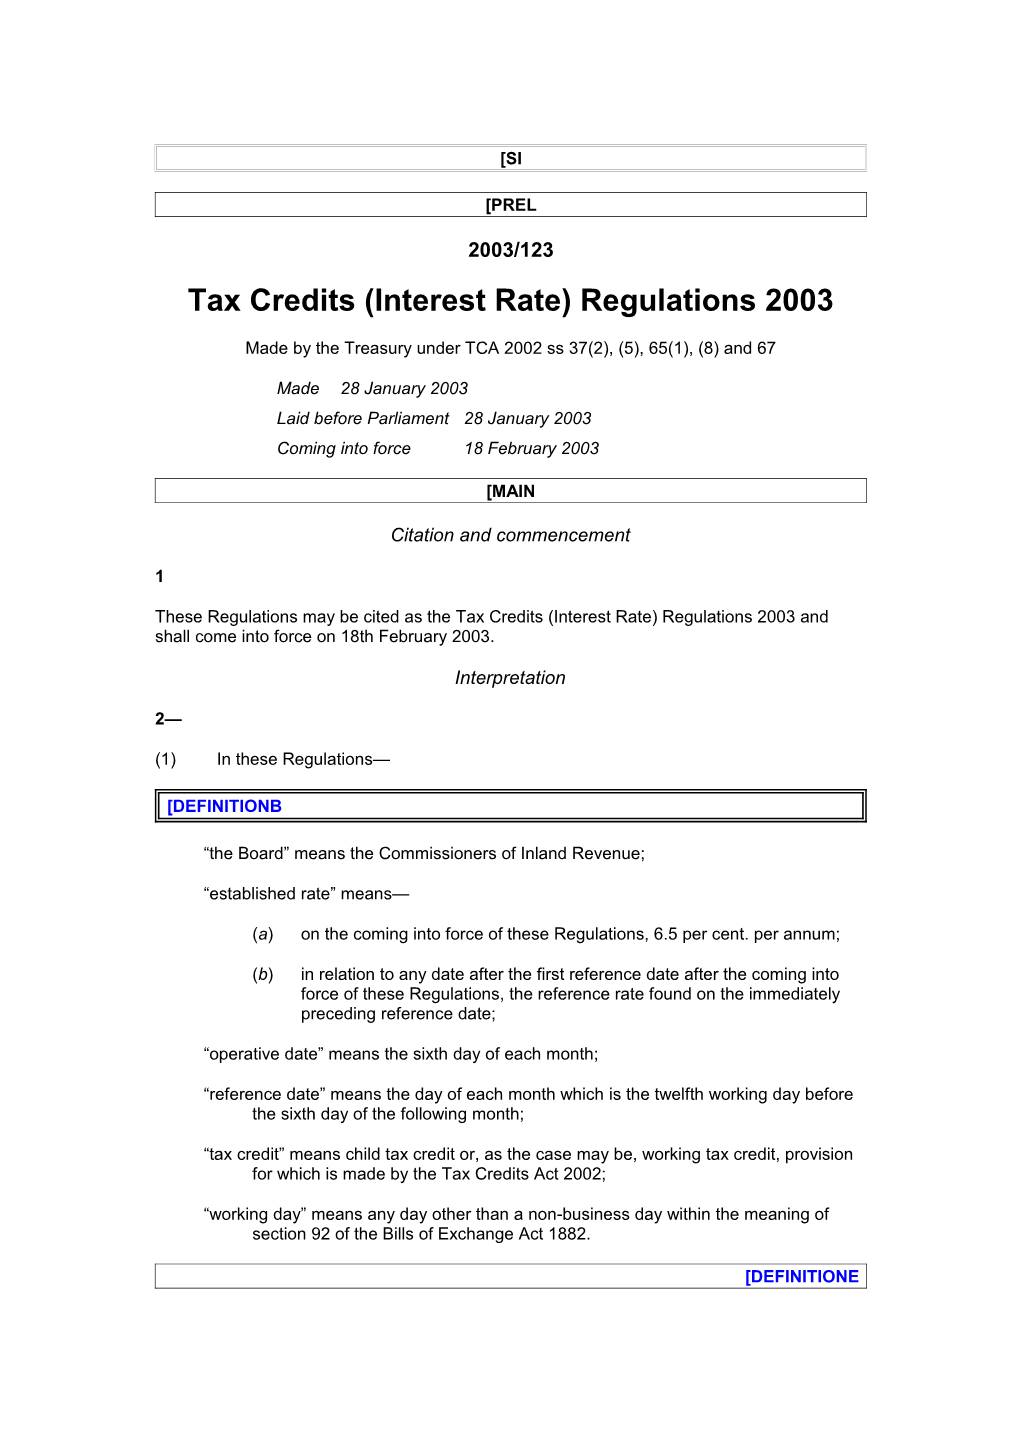 Tax Credits (Interest Rate) Regulations 2003